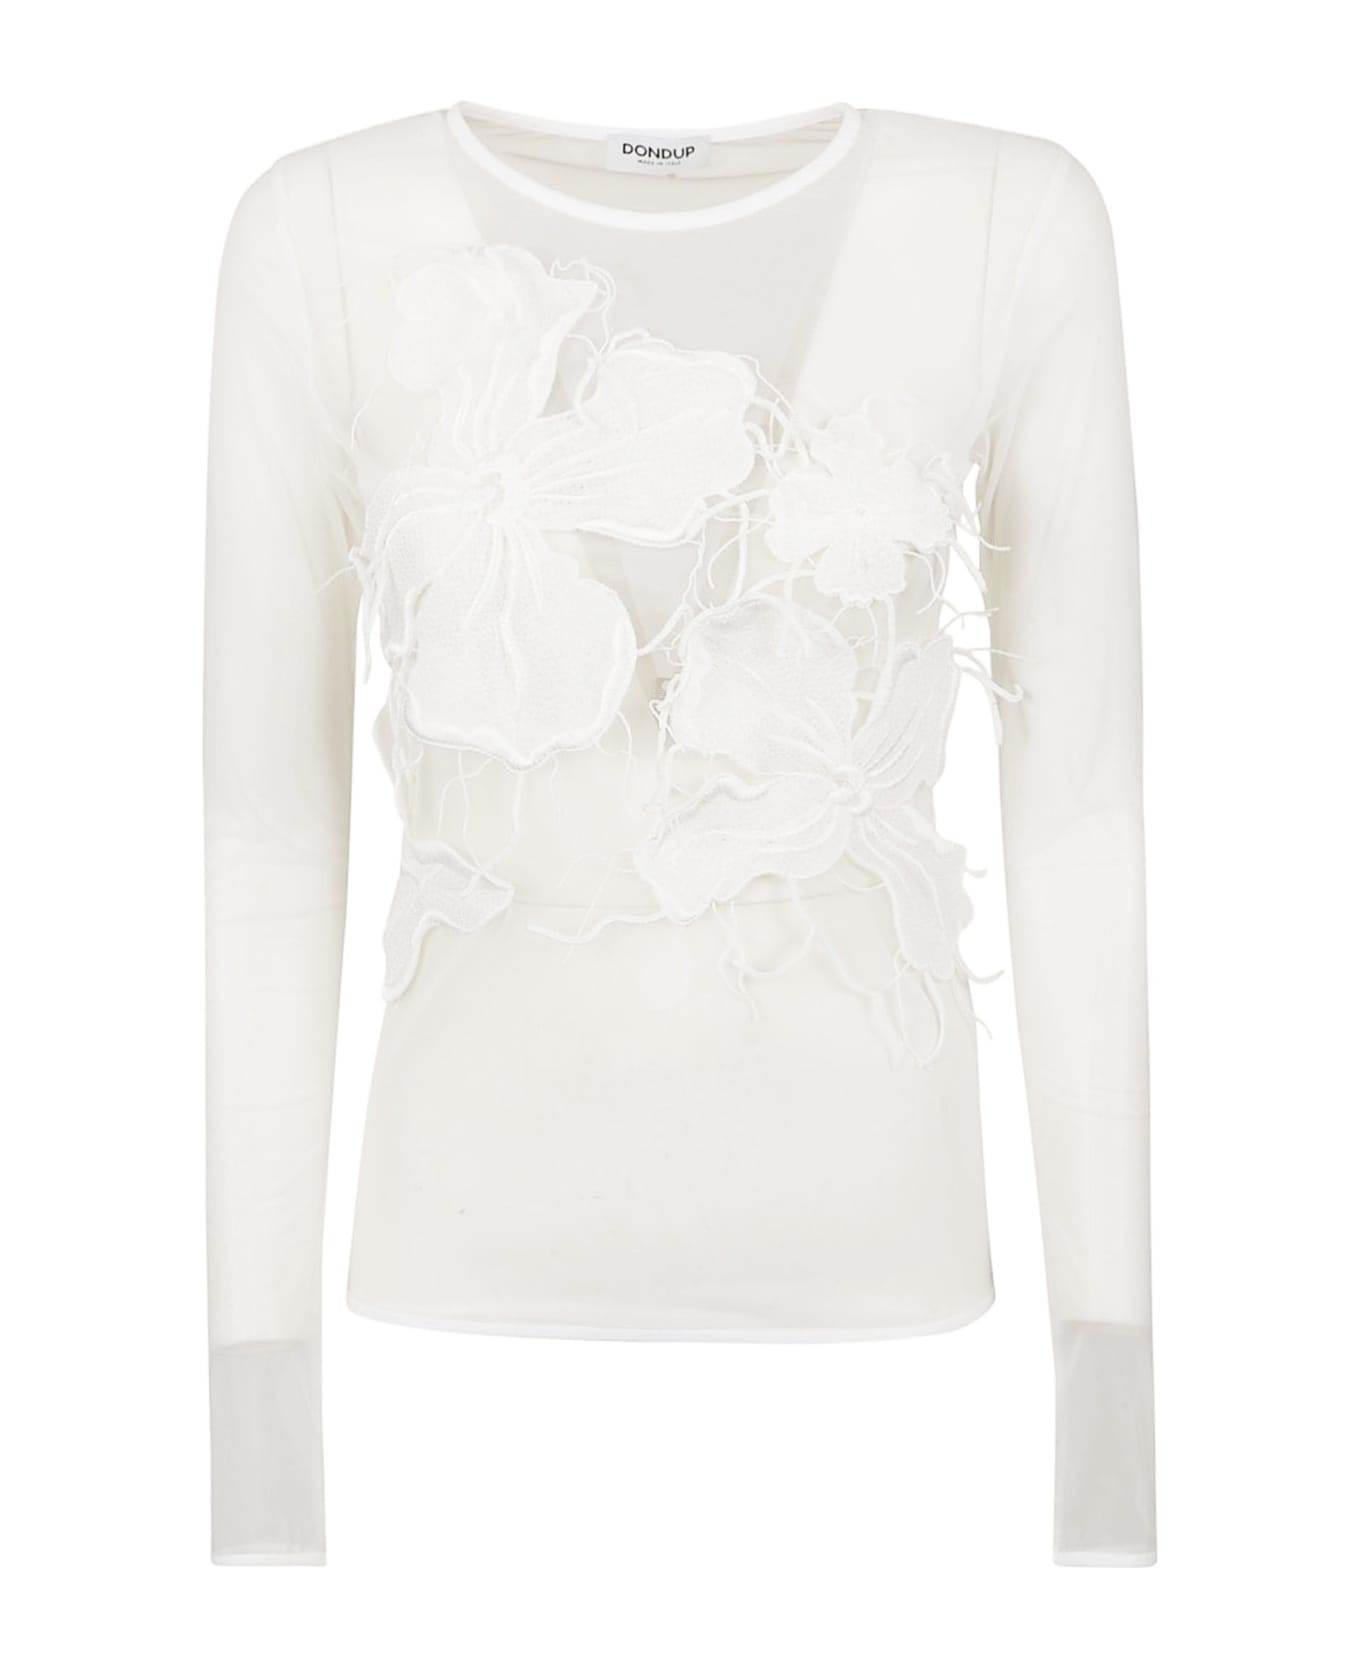 Dondup Floral See-through Shirt - White